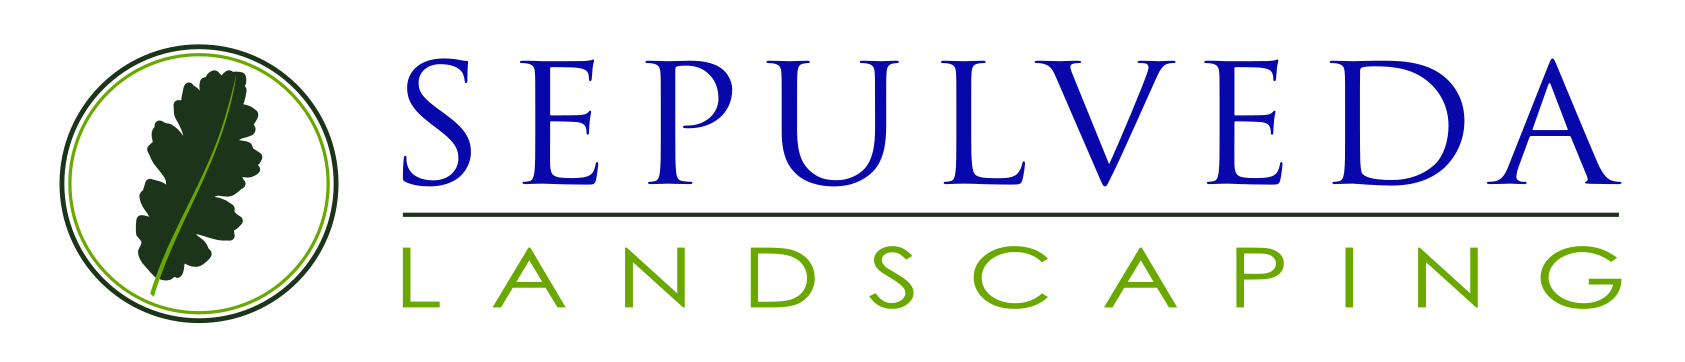 sepulvedadlandscaping-logo-official